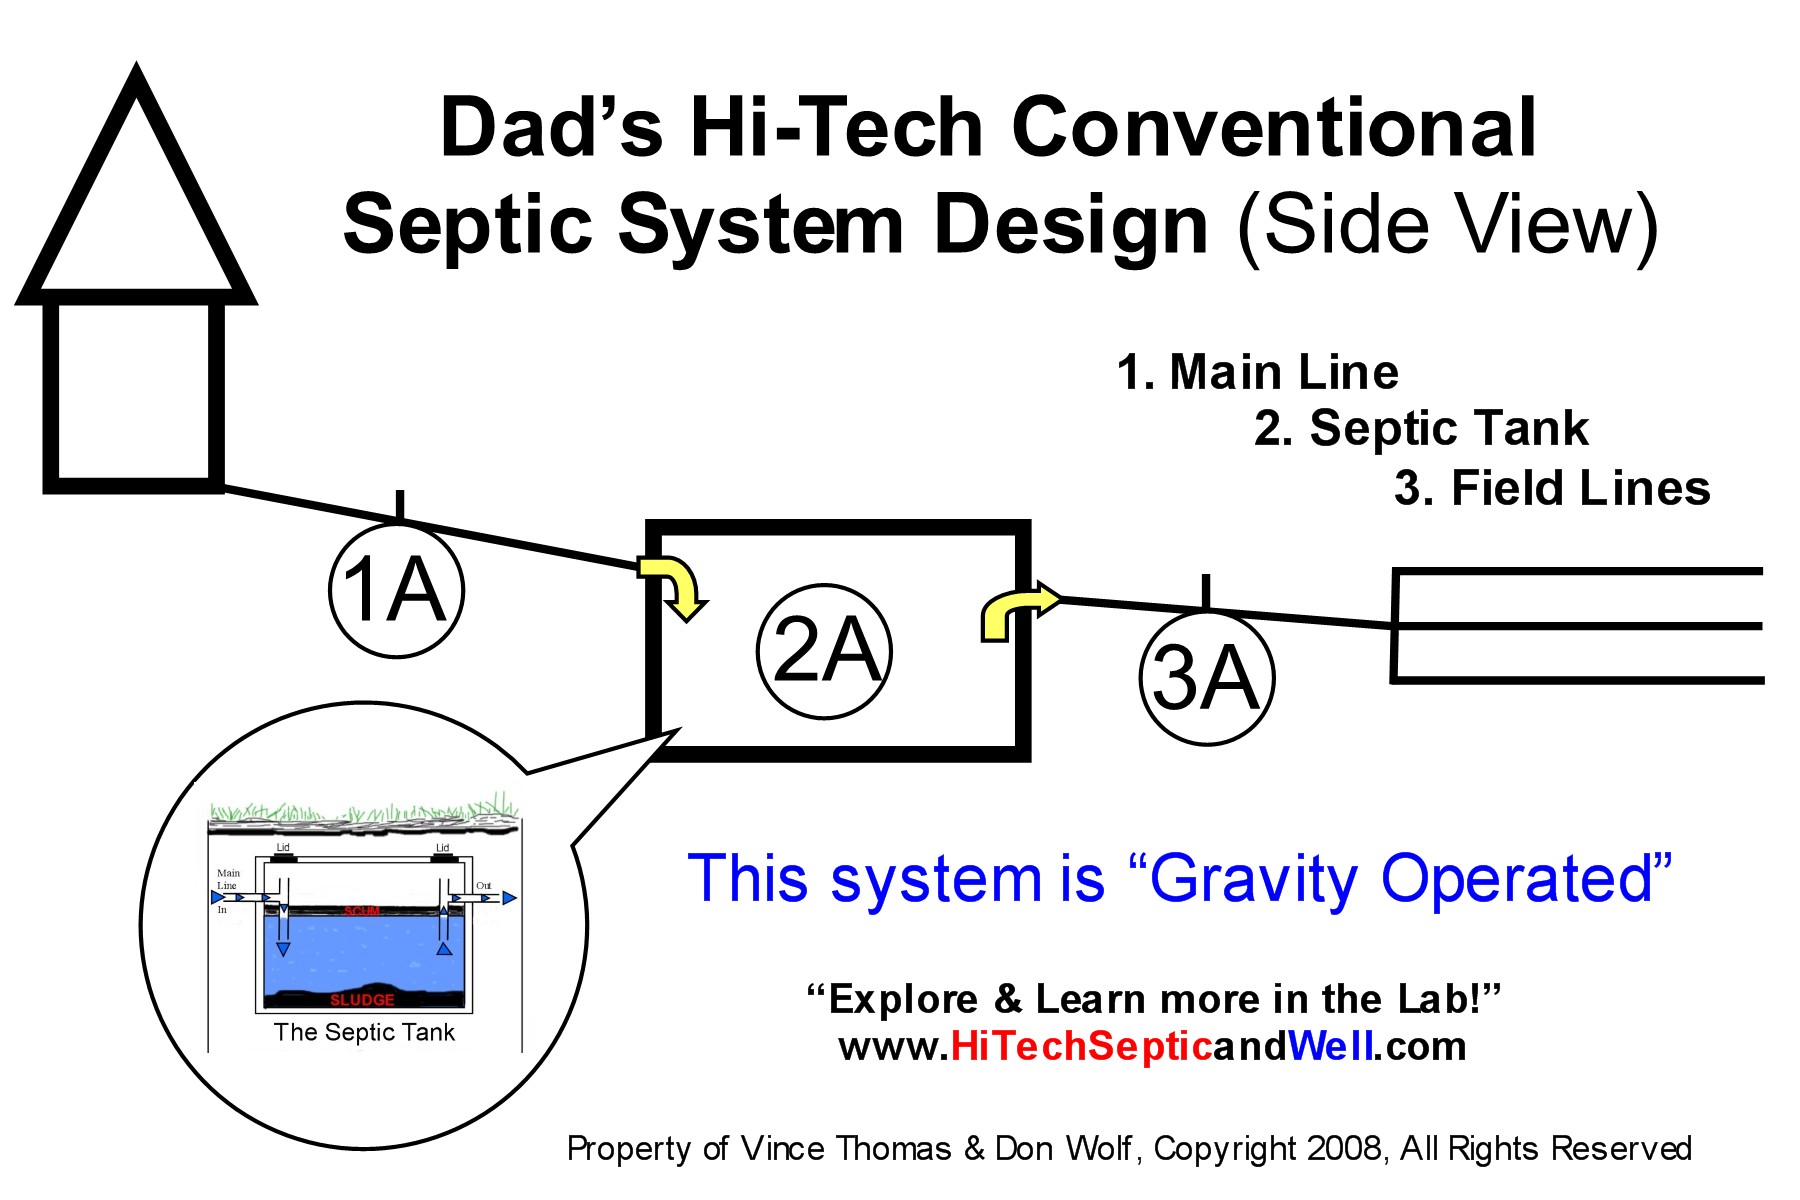 dadshitechconventionalsepticsystemdesign0408.jpg